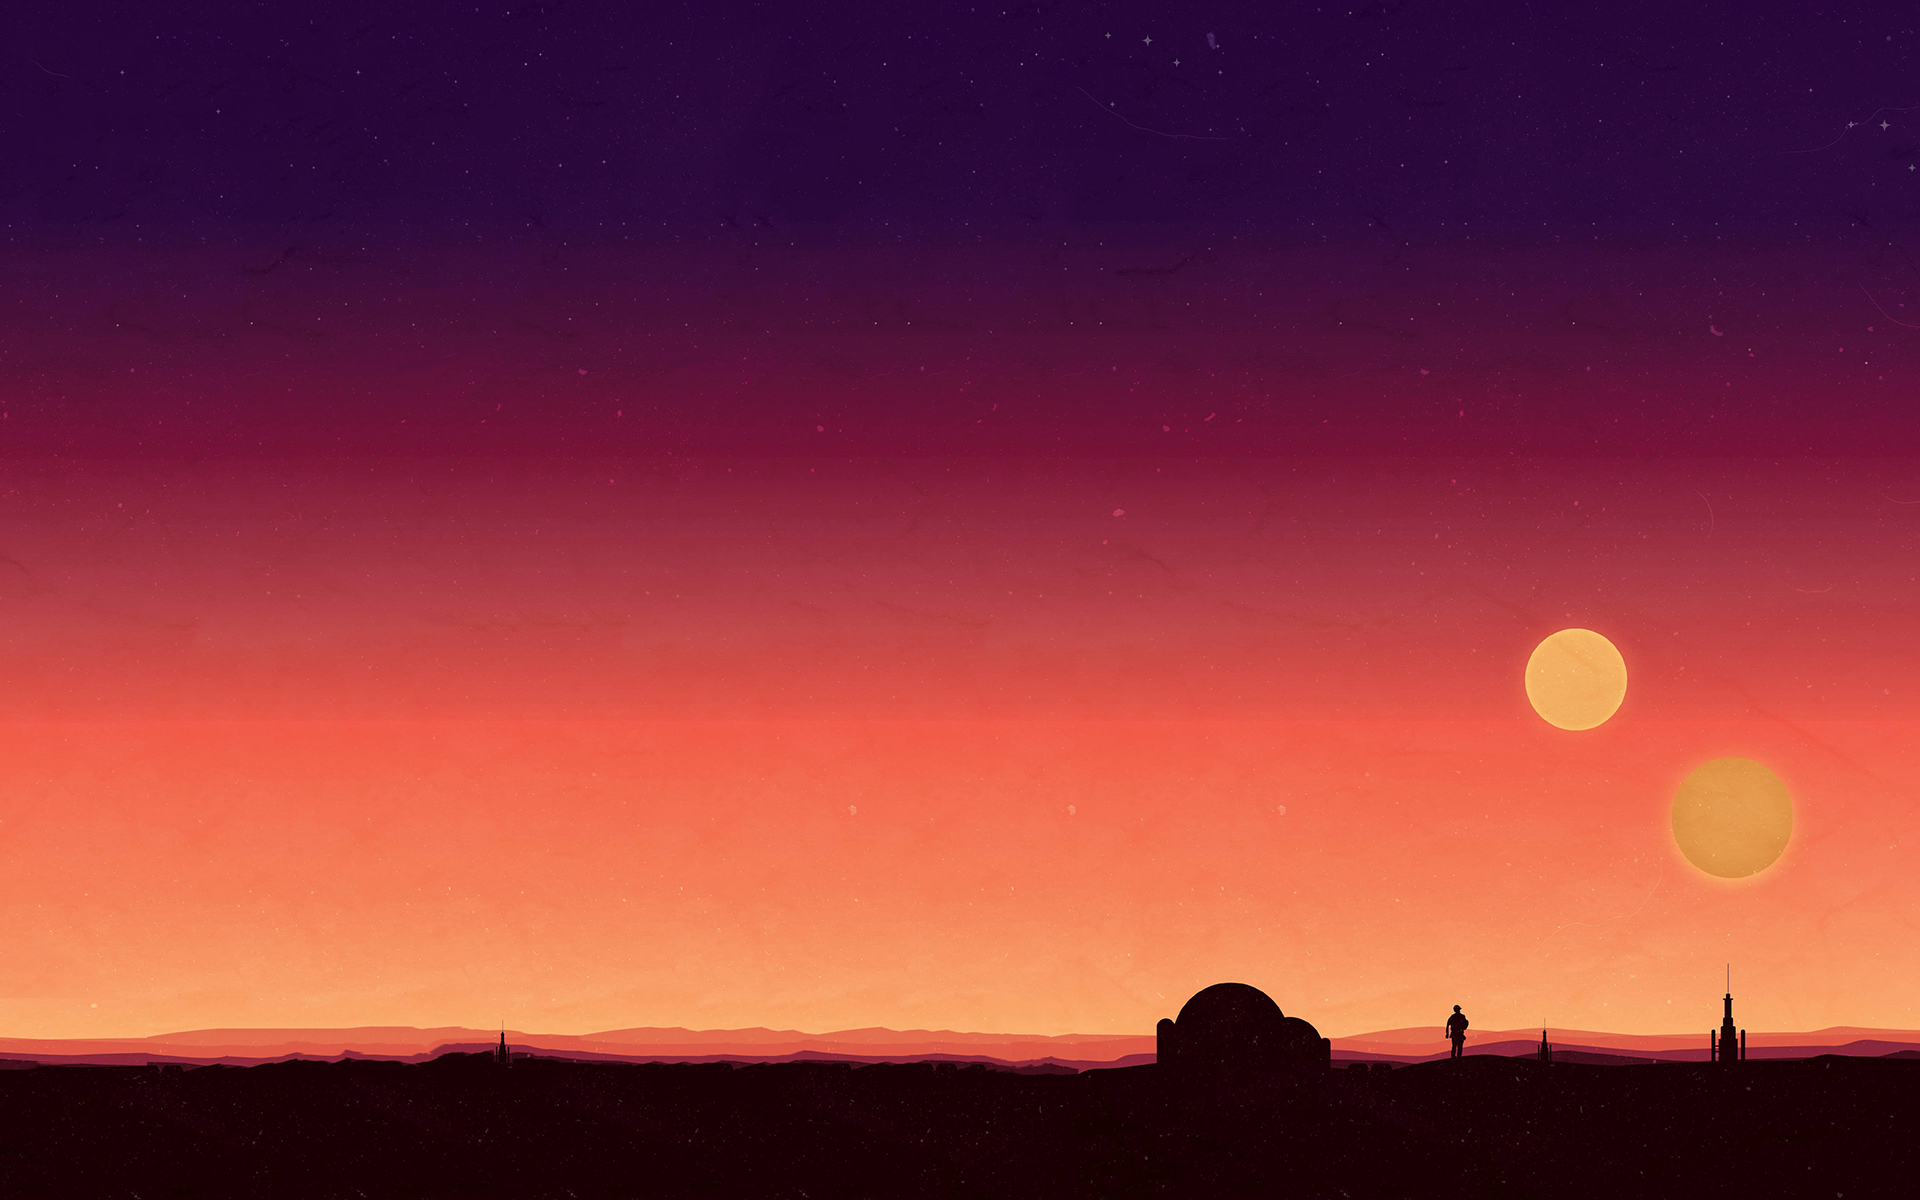 tatooine (star wars), sunset, luke skywalker, stars, star wars, movie, desert, orange (color)